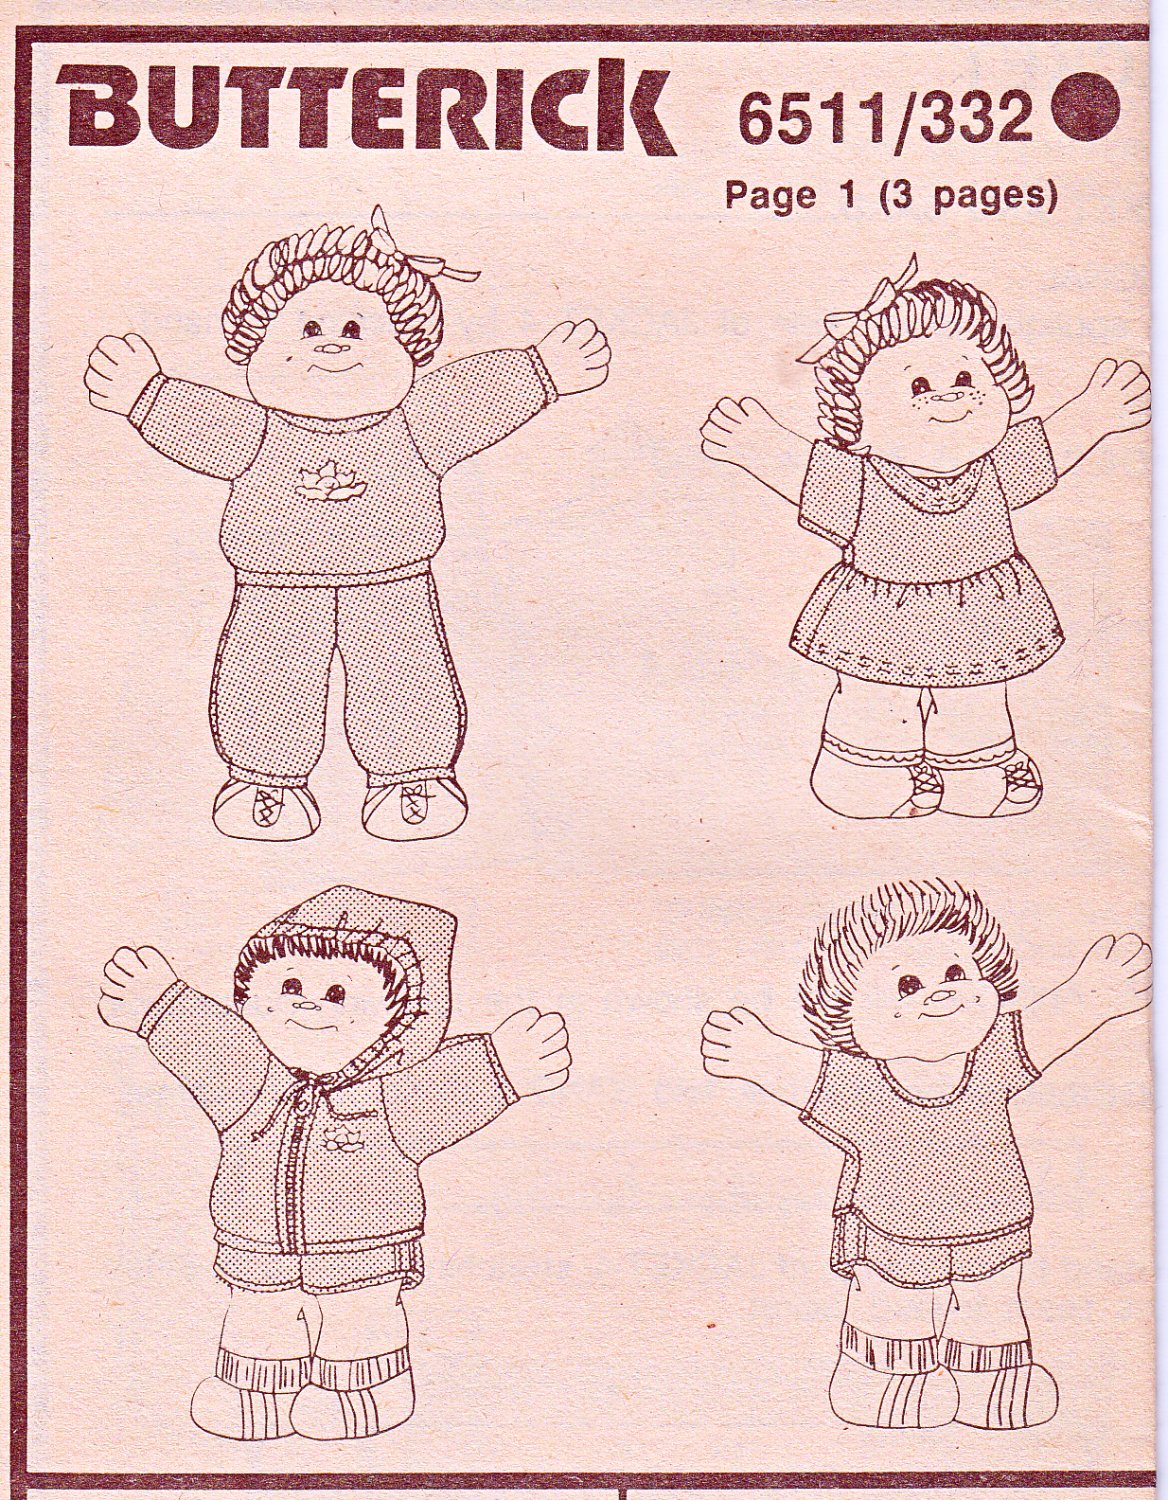 cabbage-patch-kids-doll-pattern-transfers-butterick-332-pattern-oop-uncut